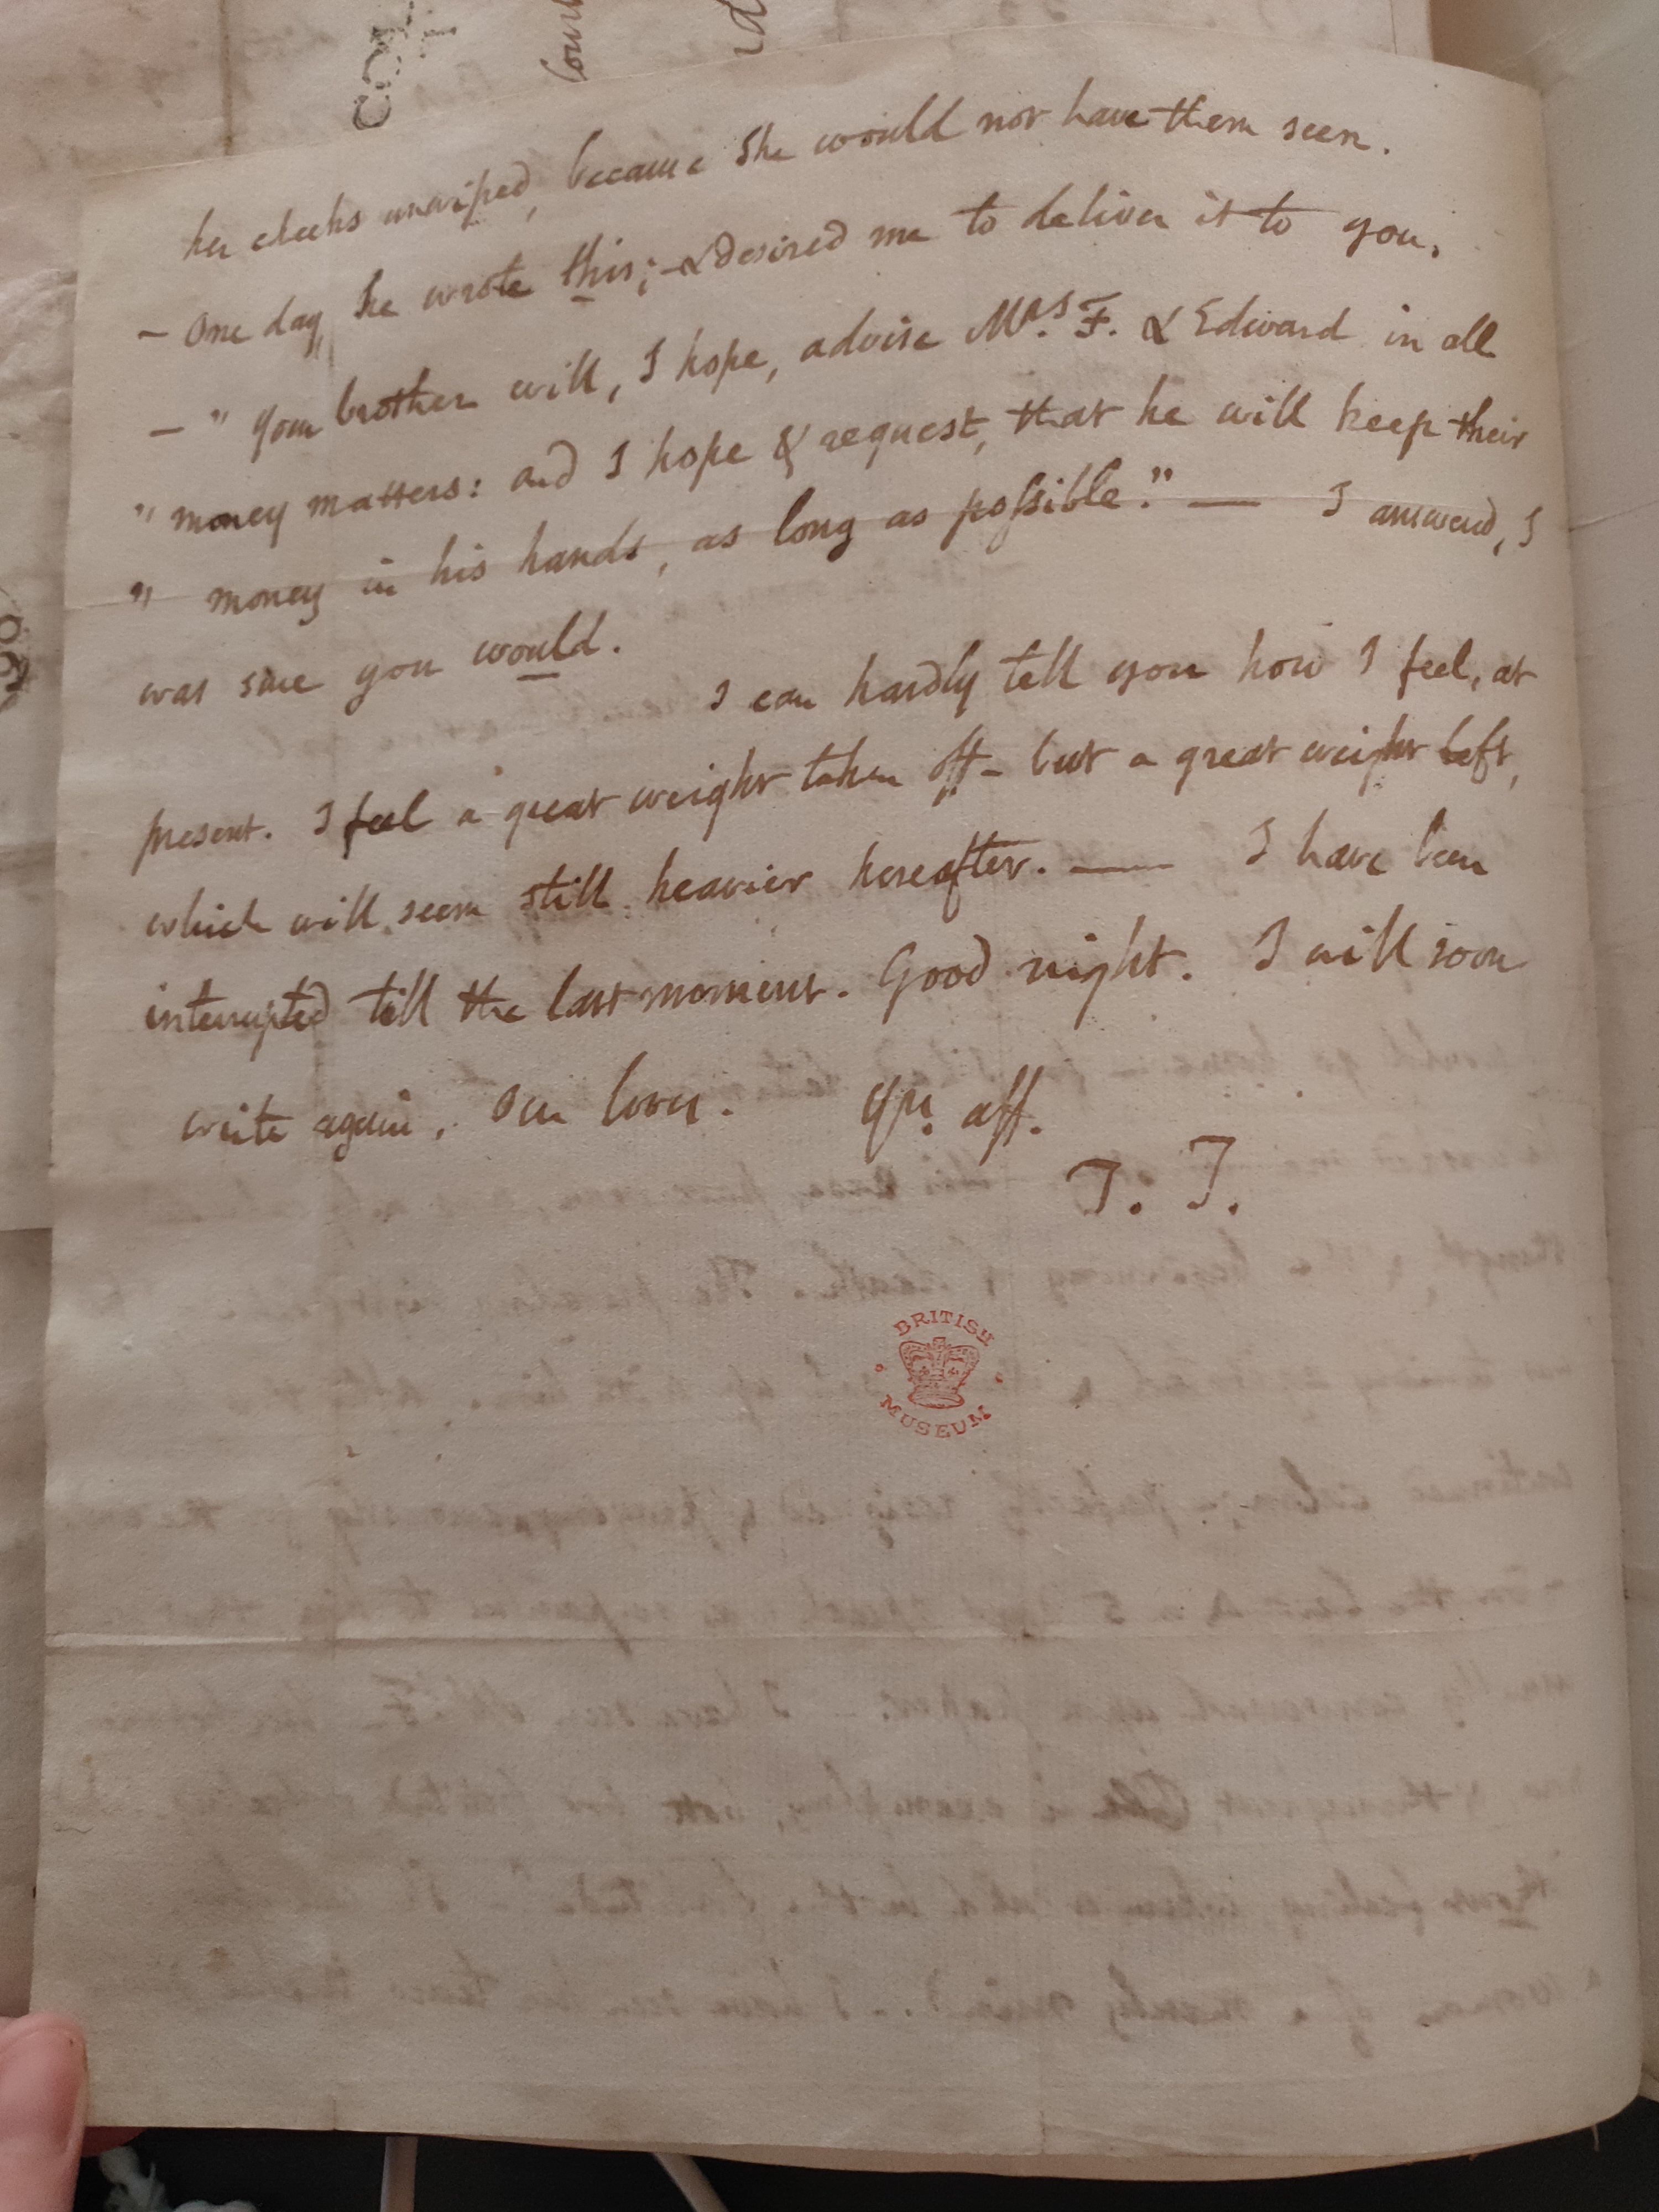 Image #2 of letter: Thomas Twining to Daniel Twining, 12 April 1790